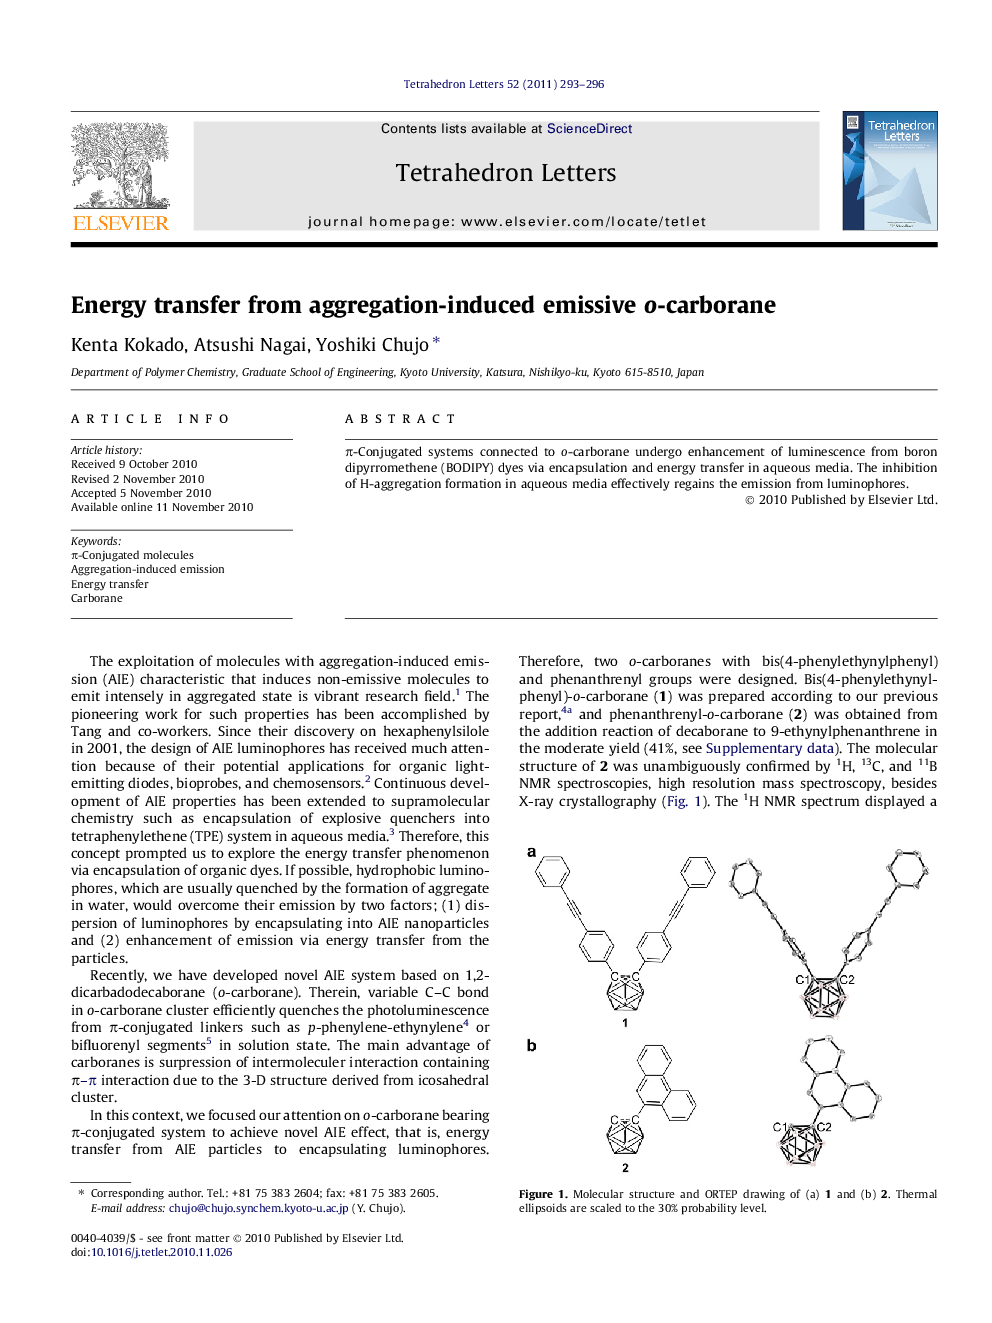 Energy transfer from aggregation-induced emissive o-carborane